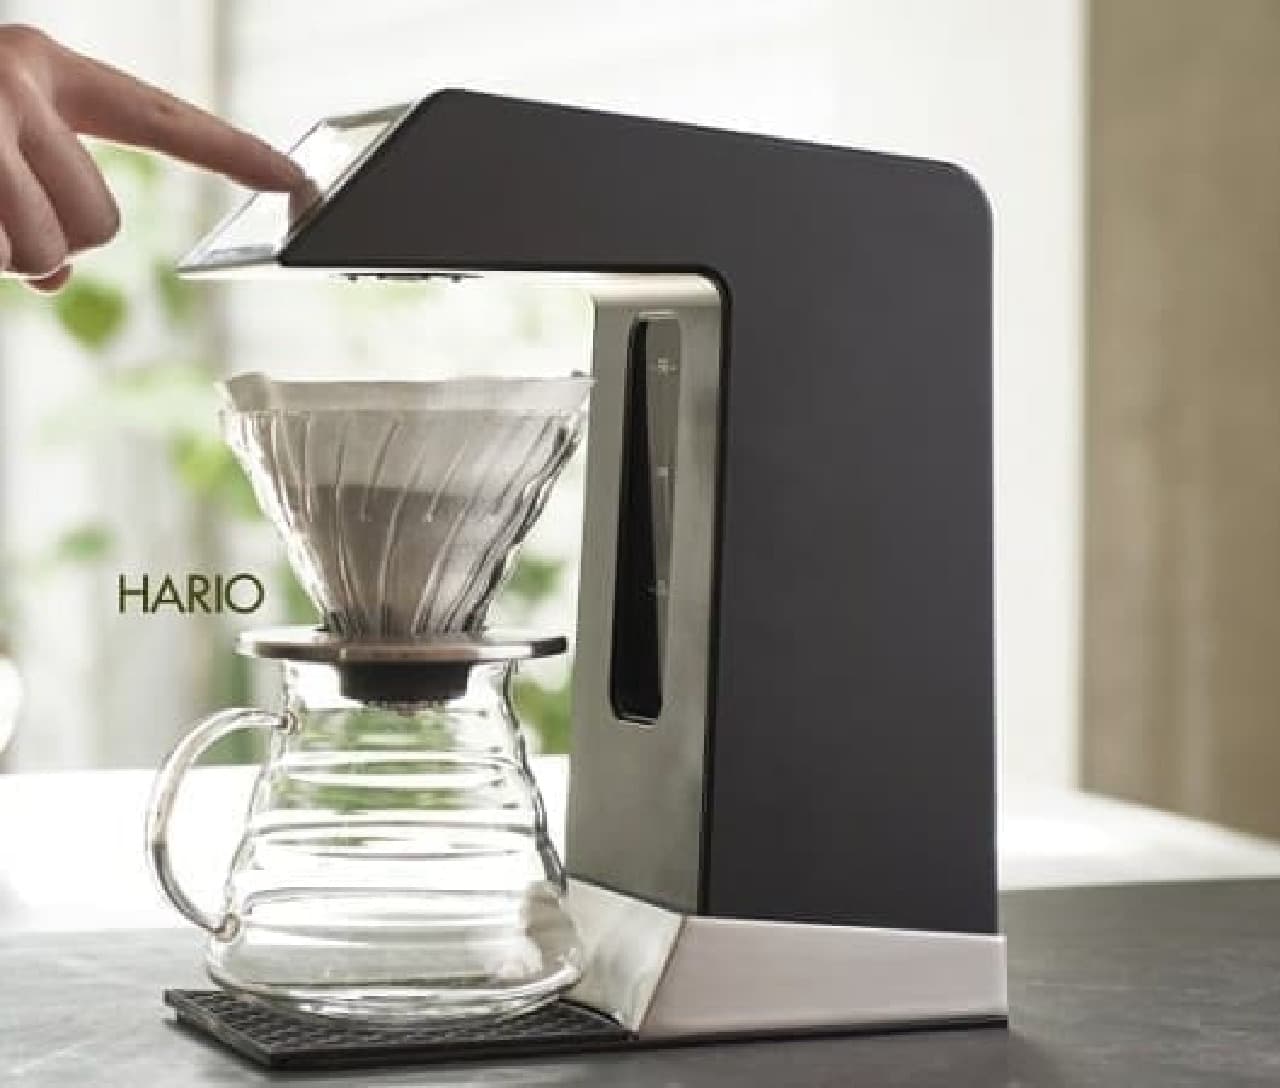 HARIO whole coffee maker